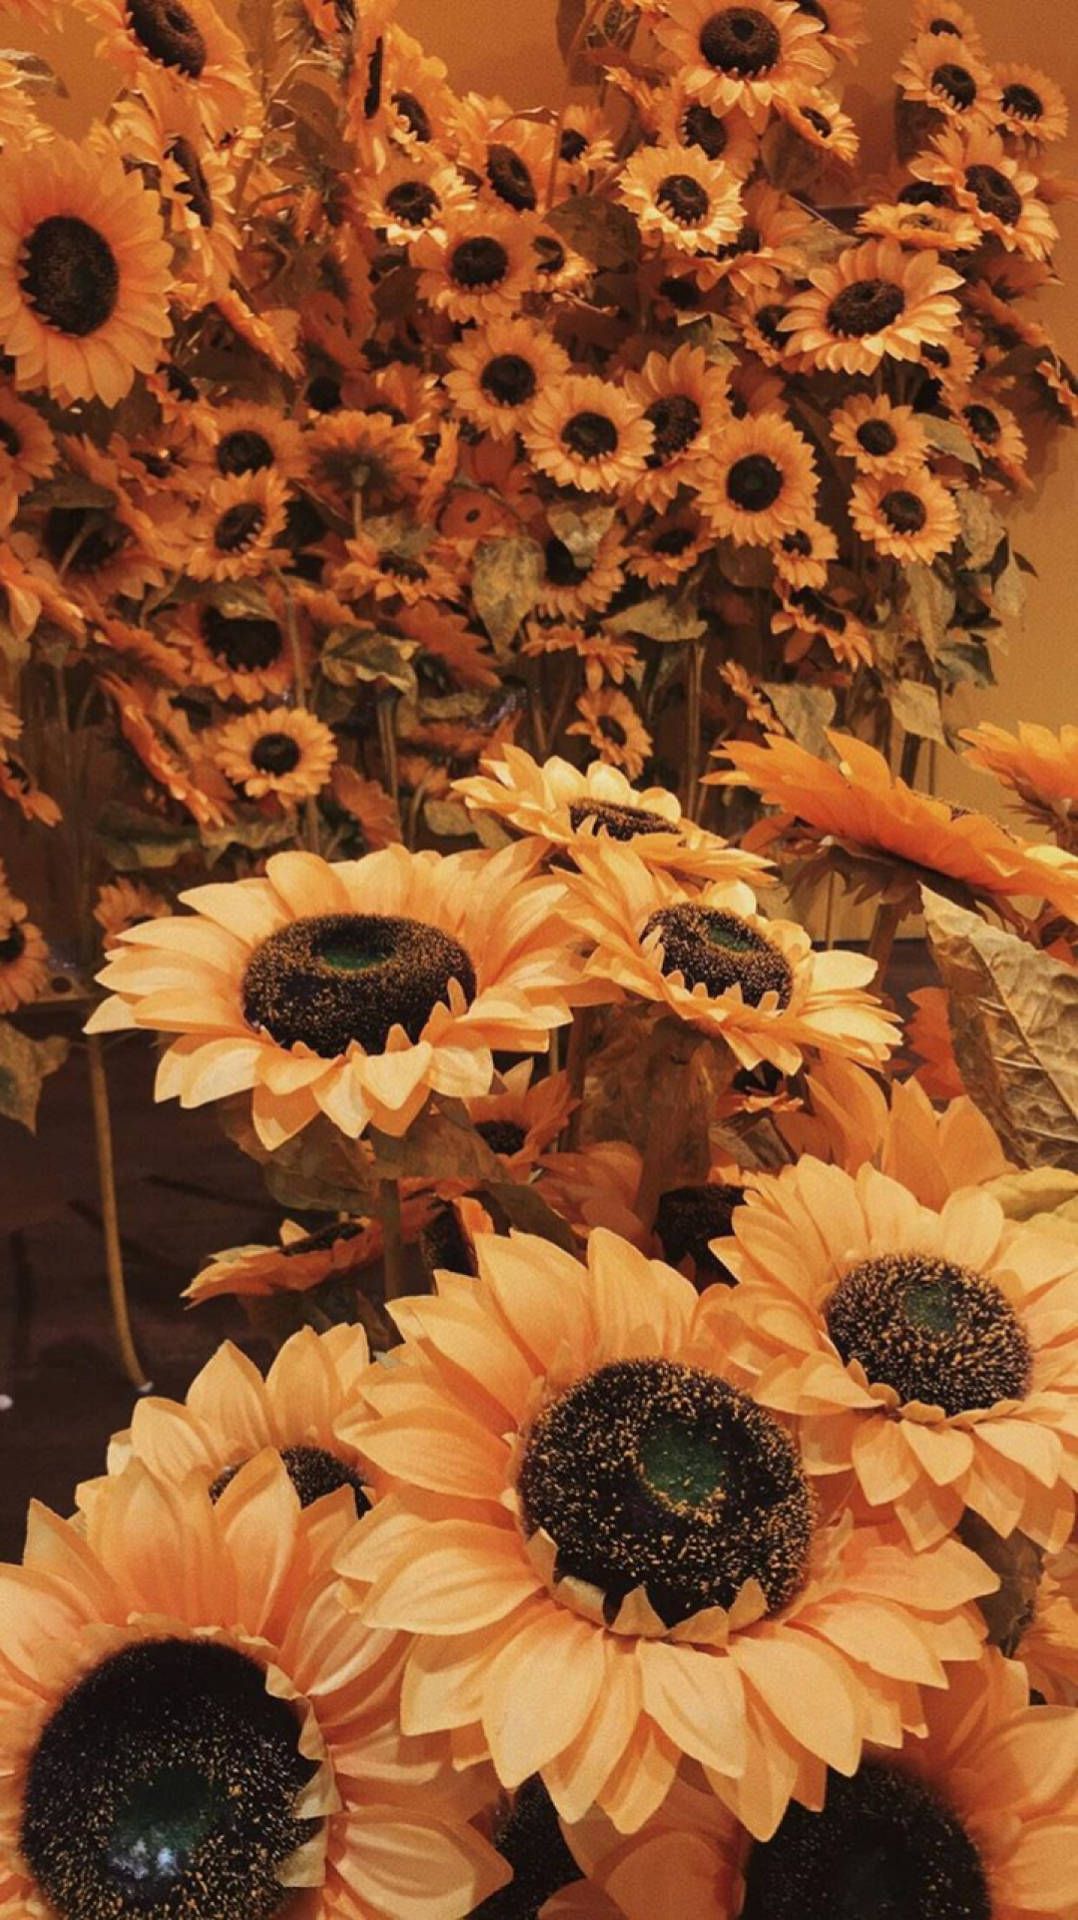 Aesthetic wallpaper of sunflowers in a vase - Orange, pastel orange, warm